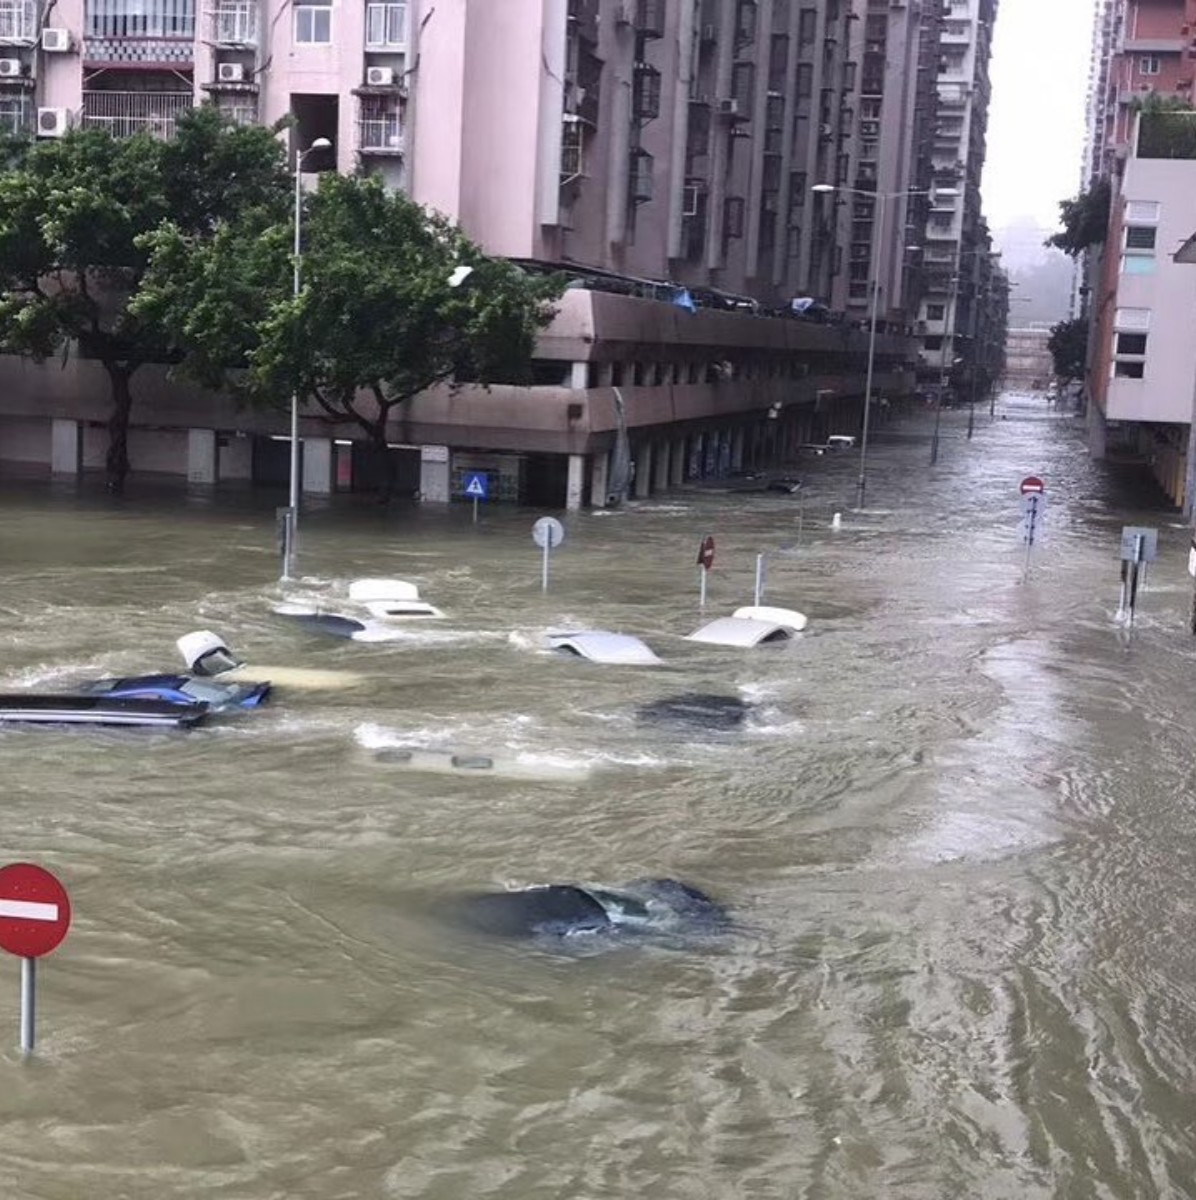 Flooding seen in Macau during Typhoon Hato. Photo: Instagram